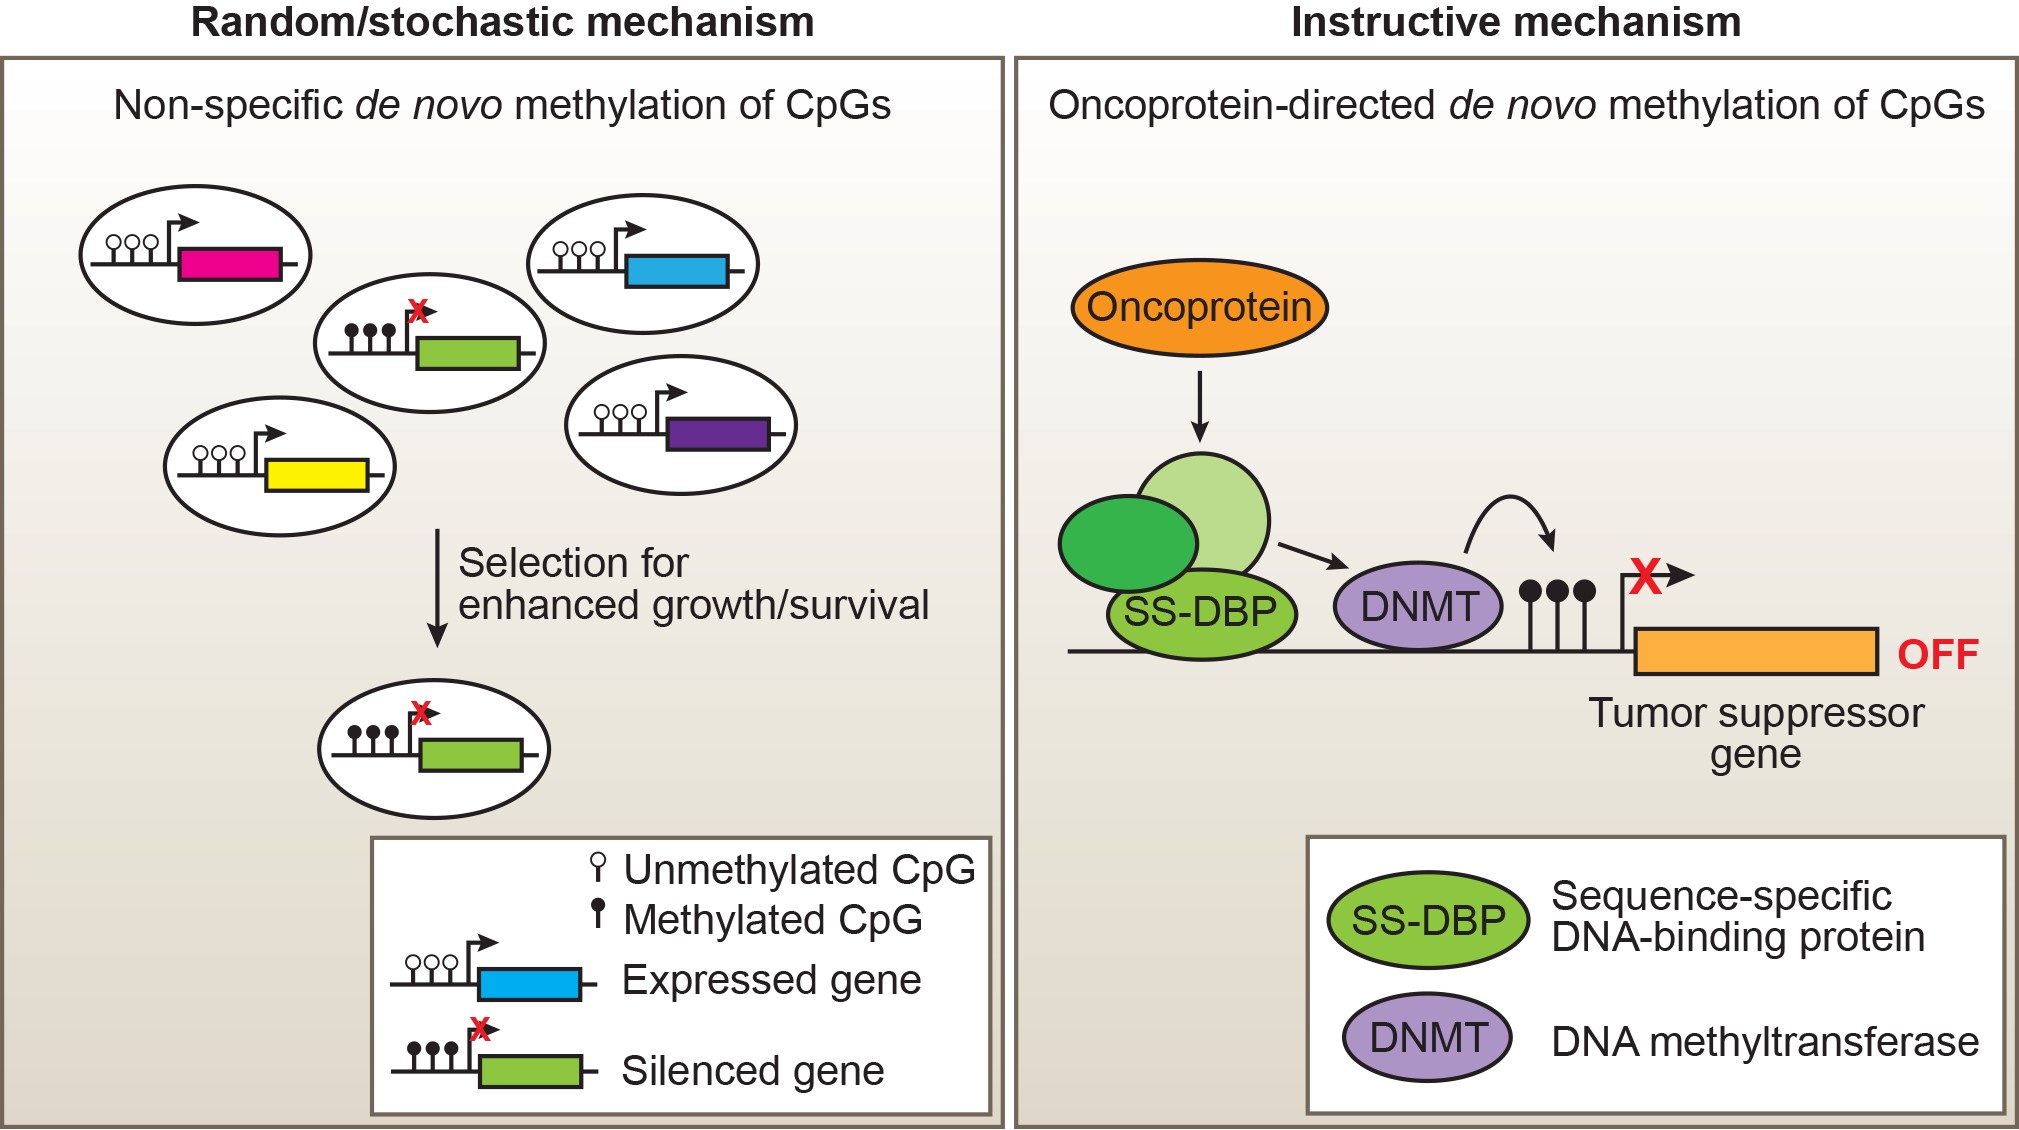 Gene silencing mechanisms